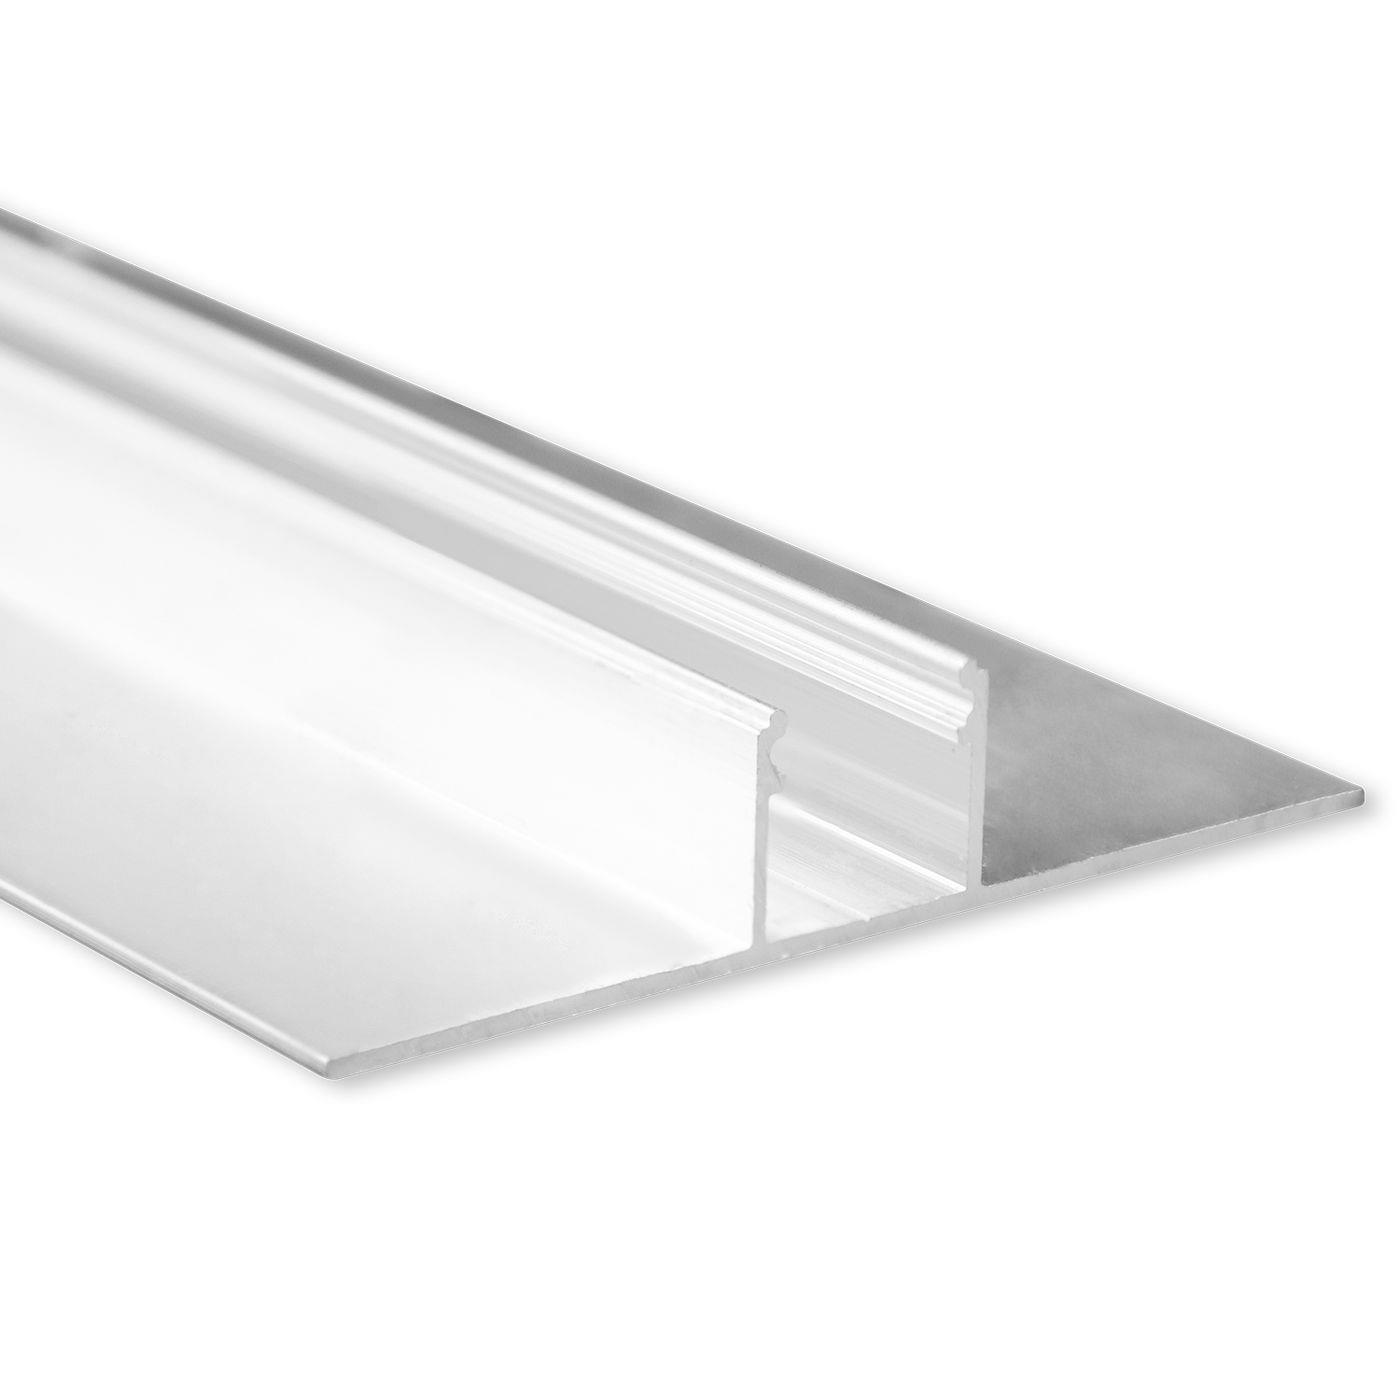 2m LED Profil TBP3 Silber 77x14,5mm Aluminium Trockenbauprofil für 14mm LED Streifen